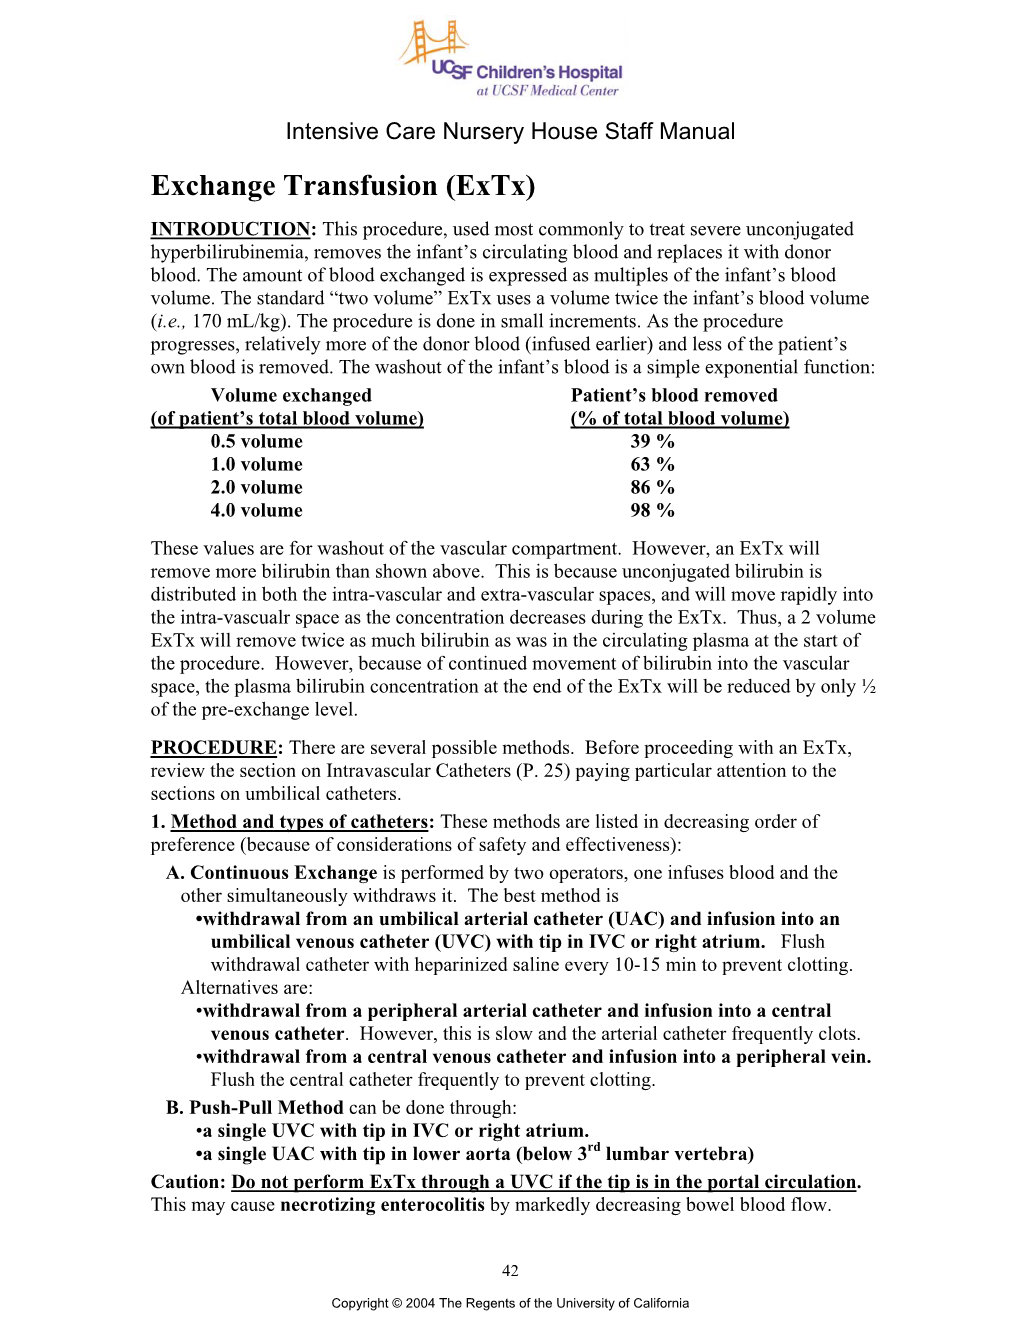 Exchange Transfusion (Extx)